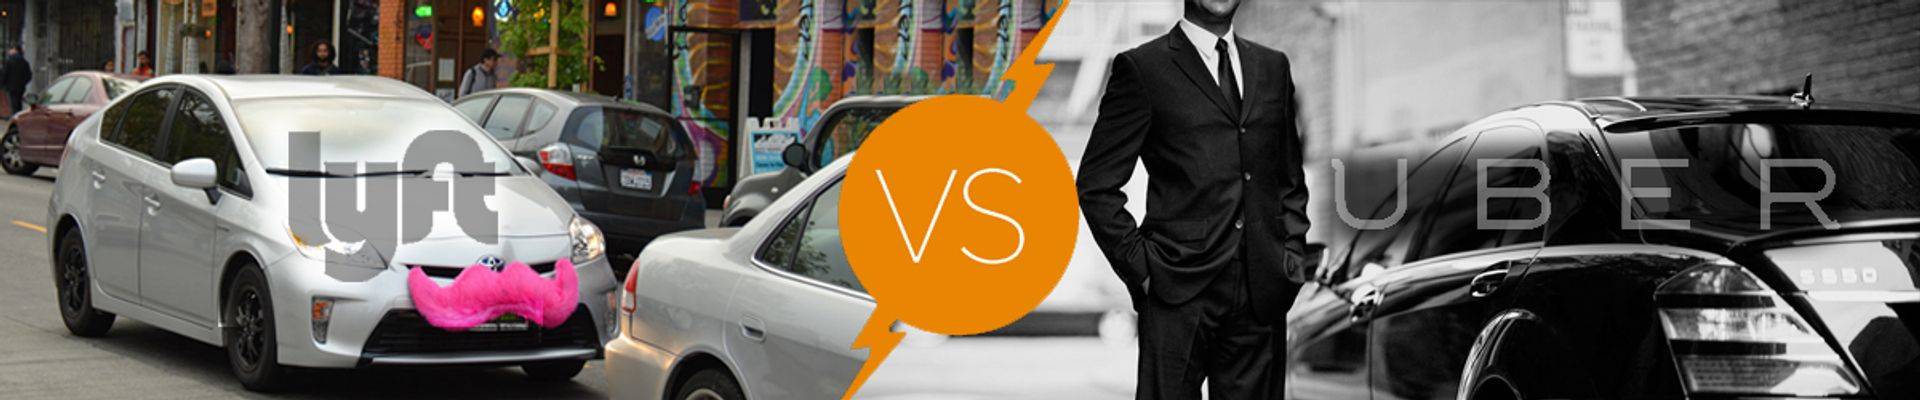 Lyft vs Uber Ride-Sharing Companies Compared